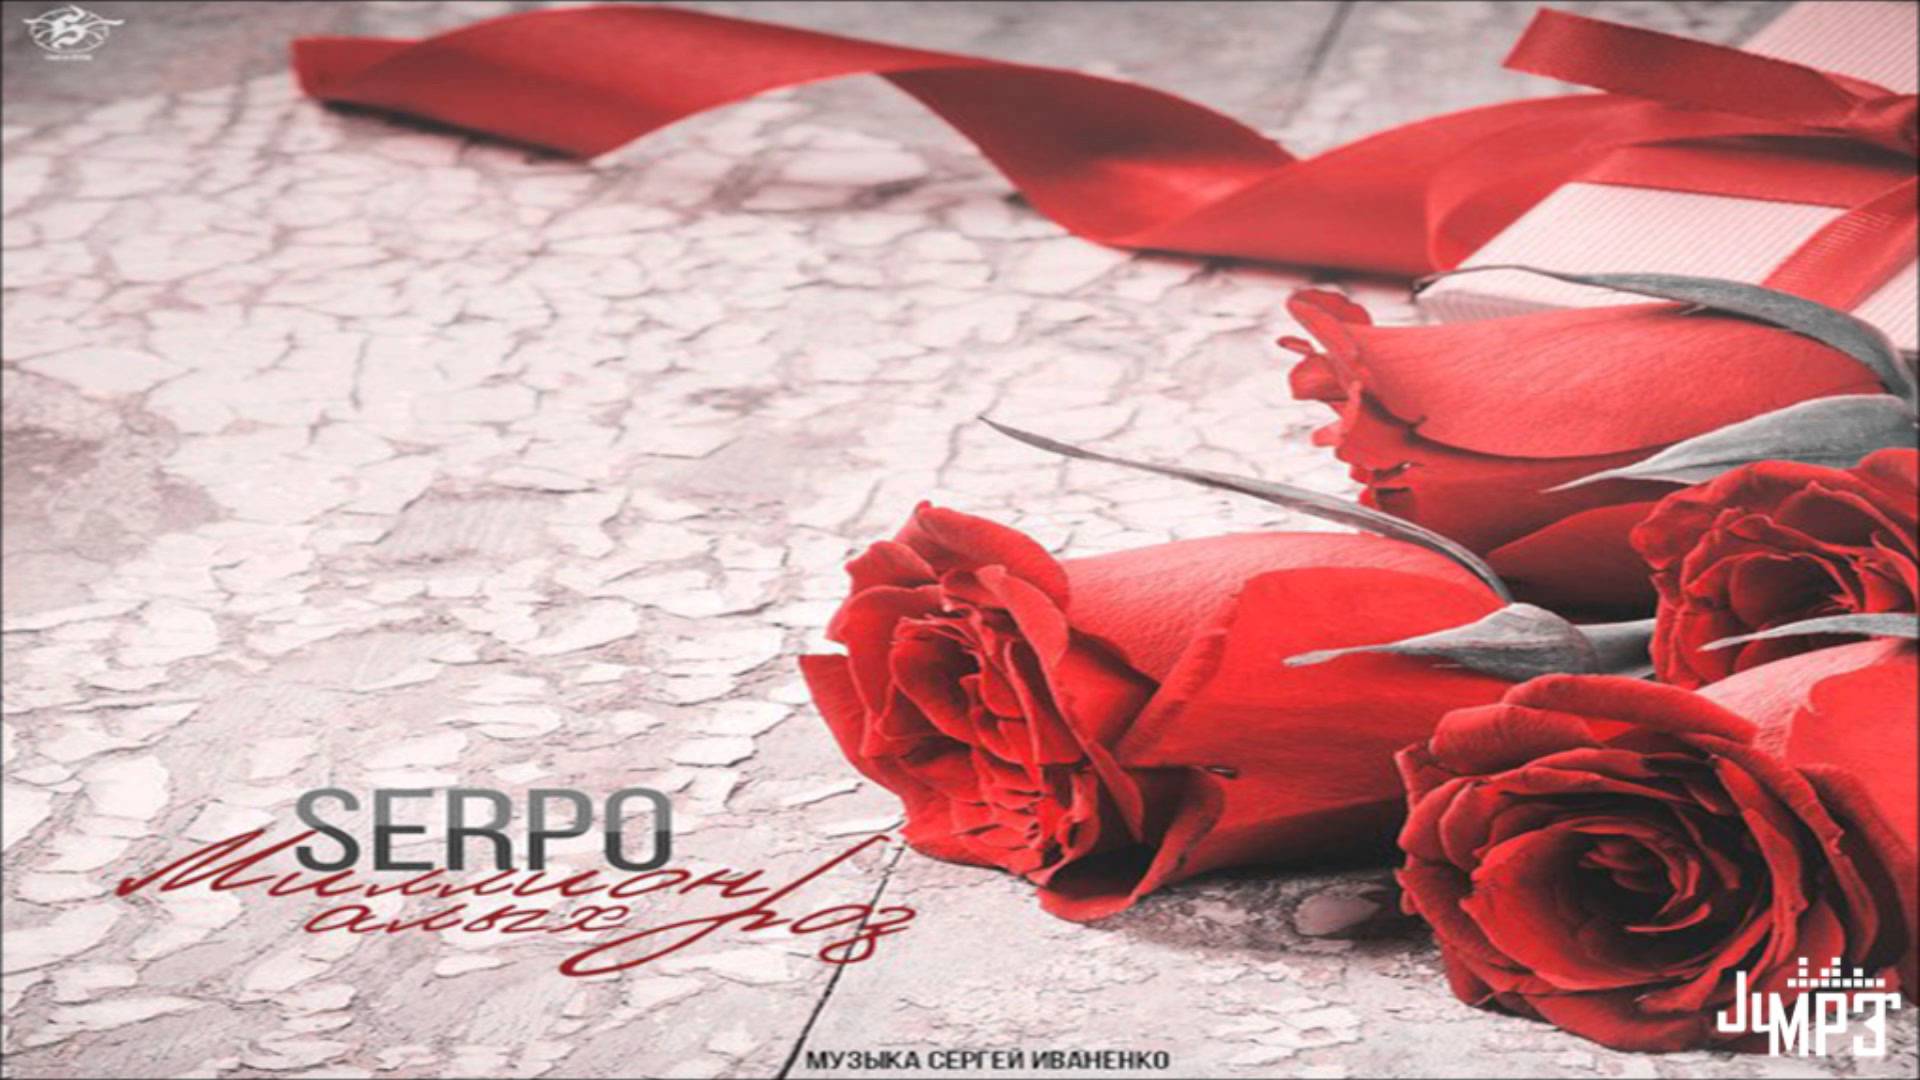 Serpo - 1 000 000 алых роз